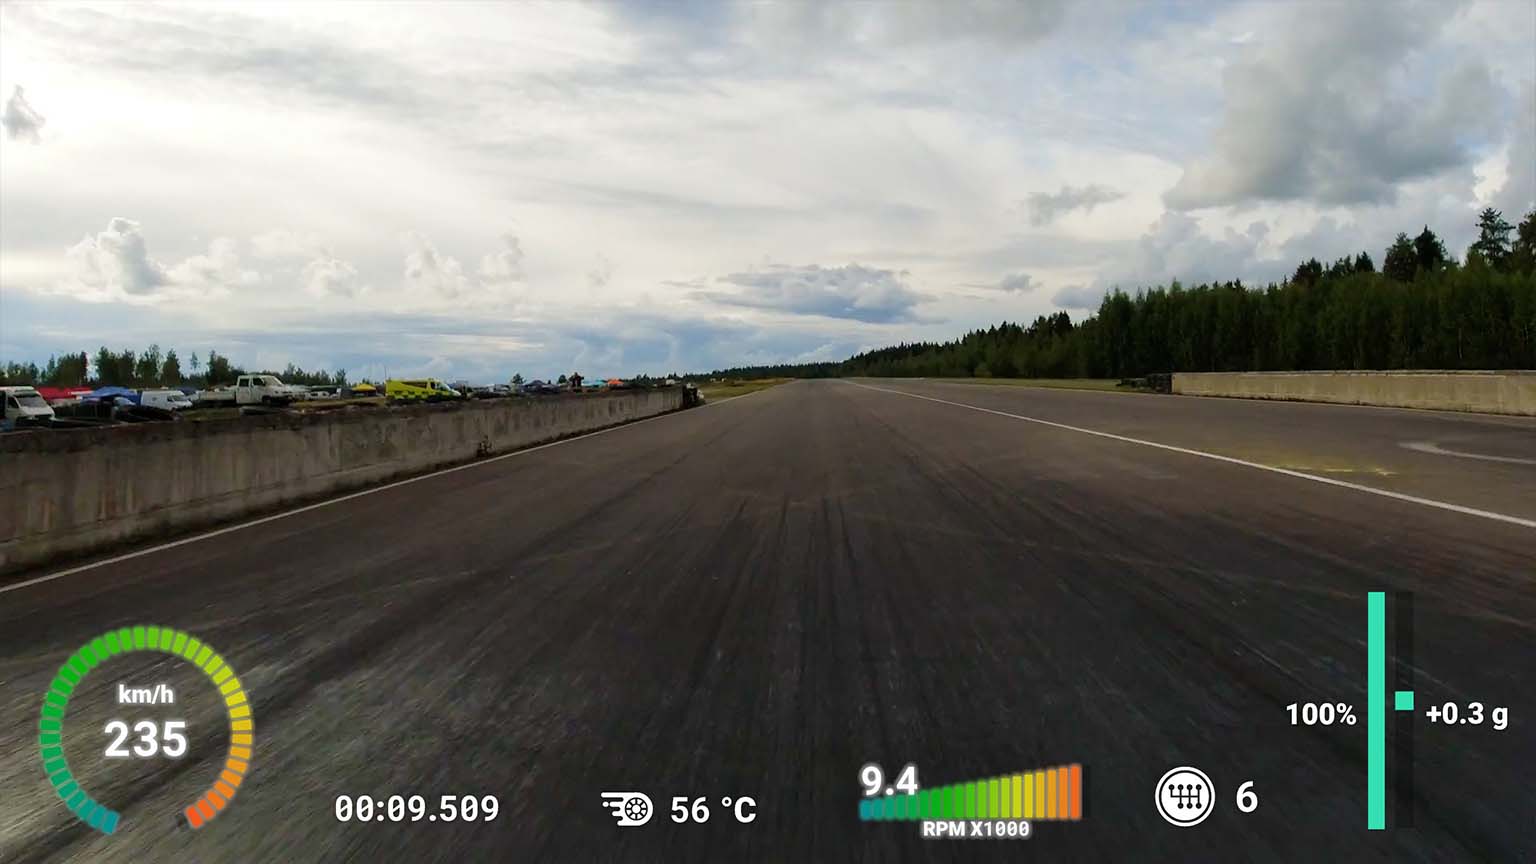 racing data on video